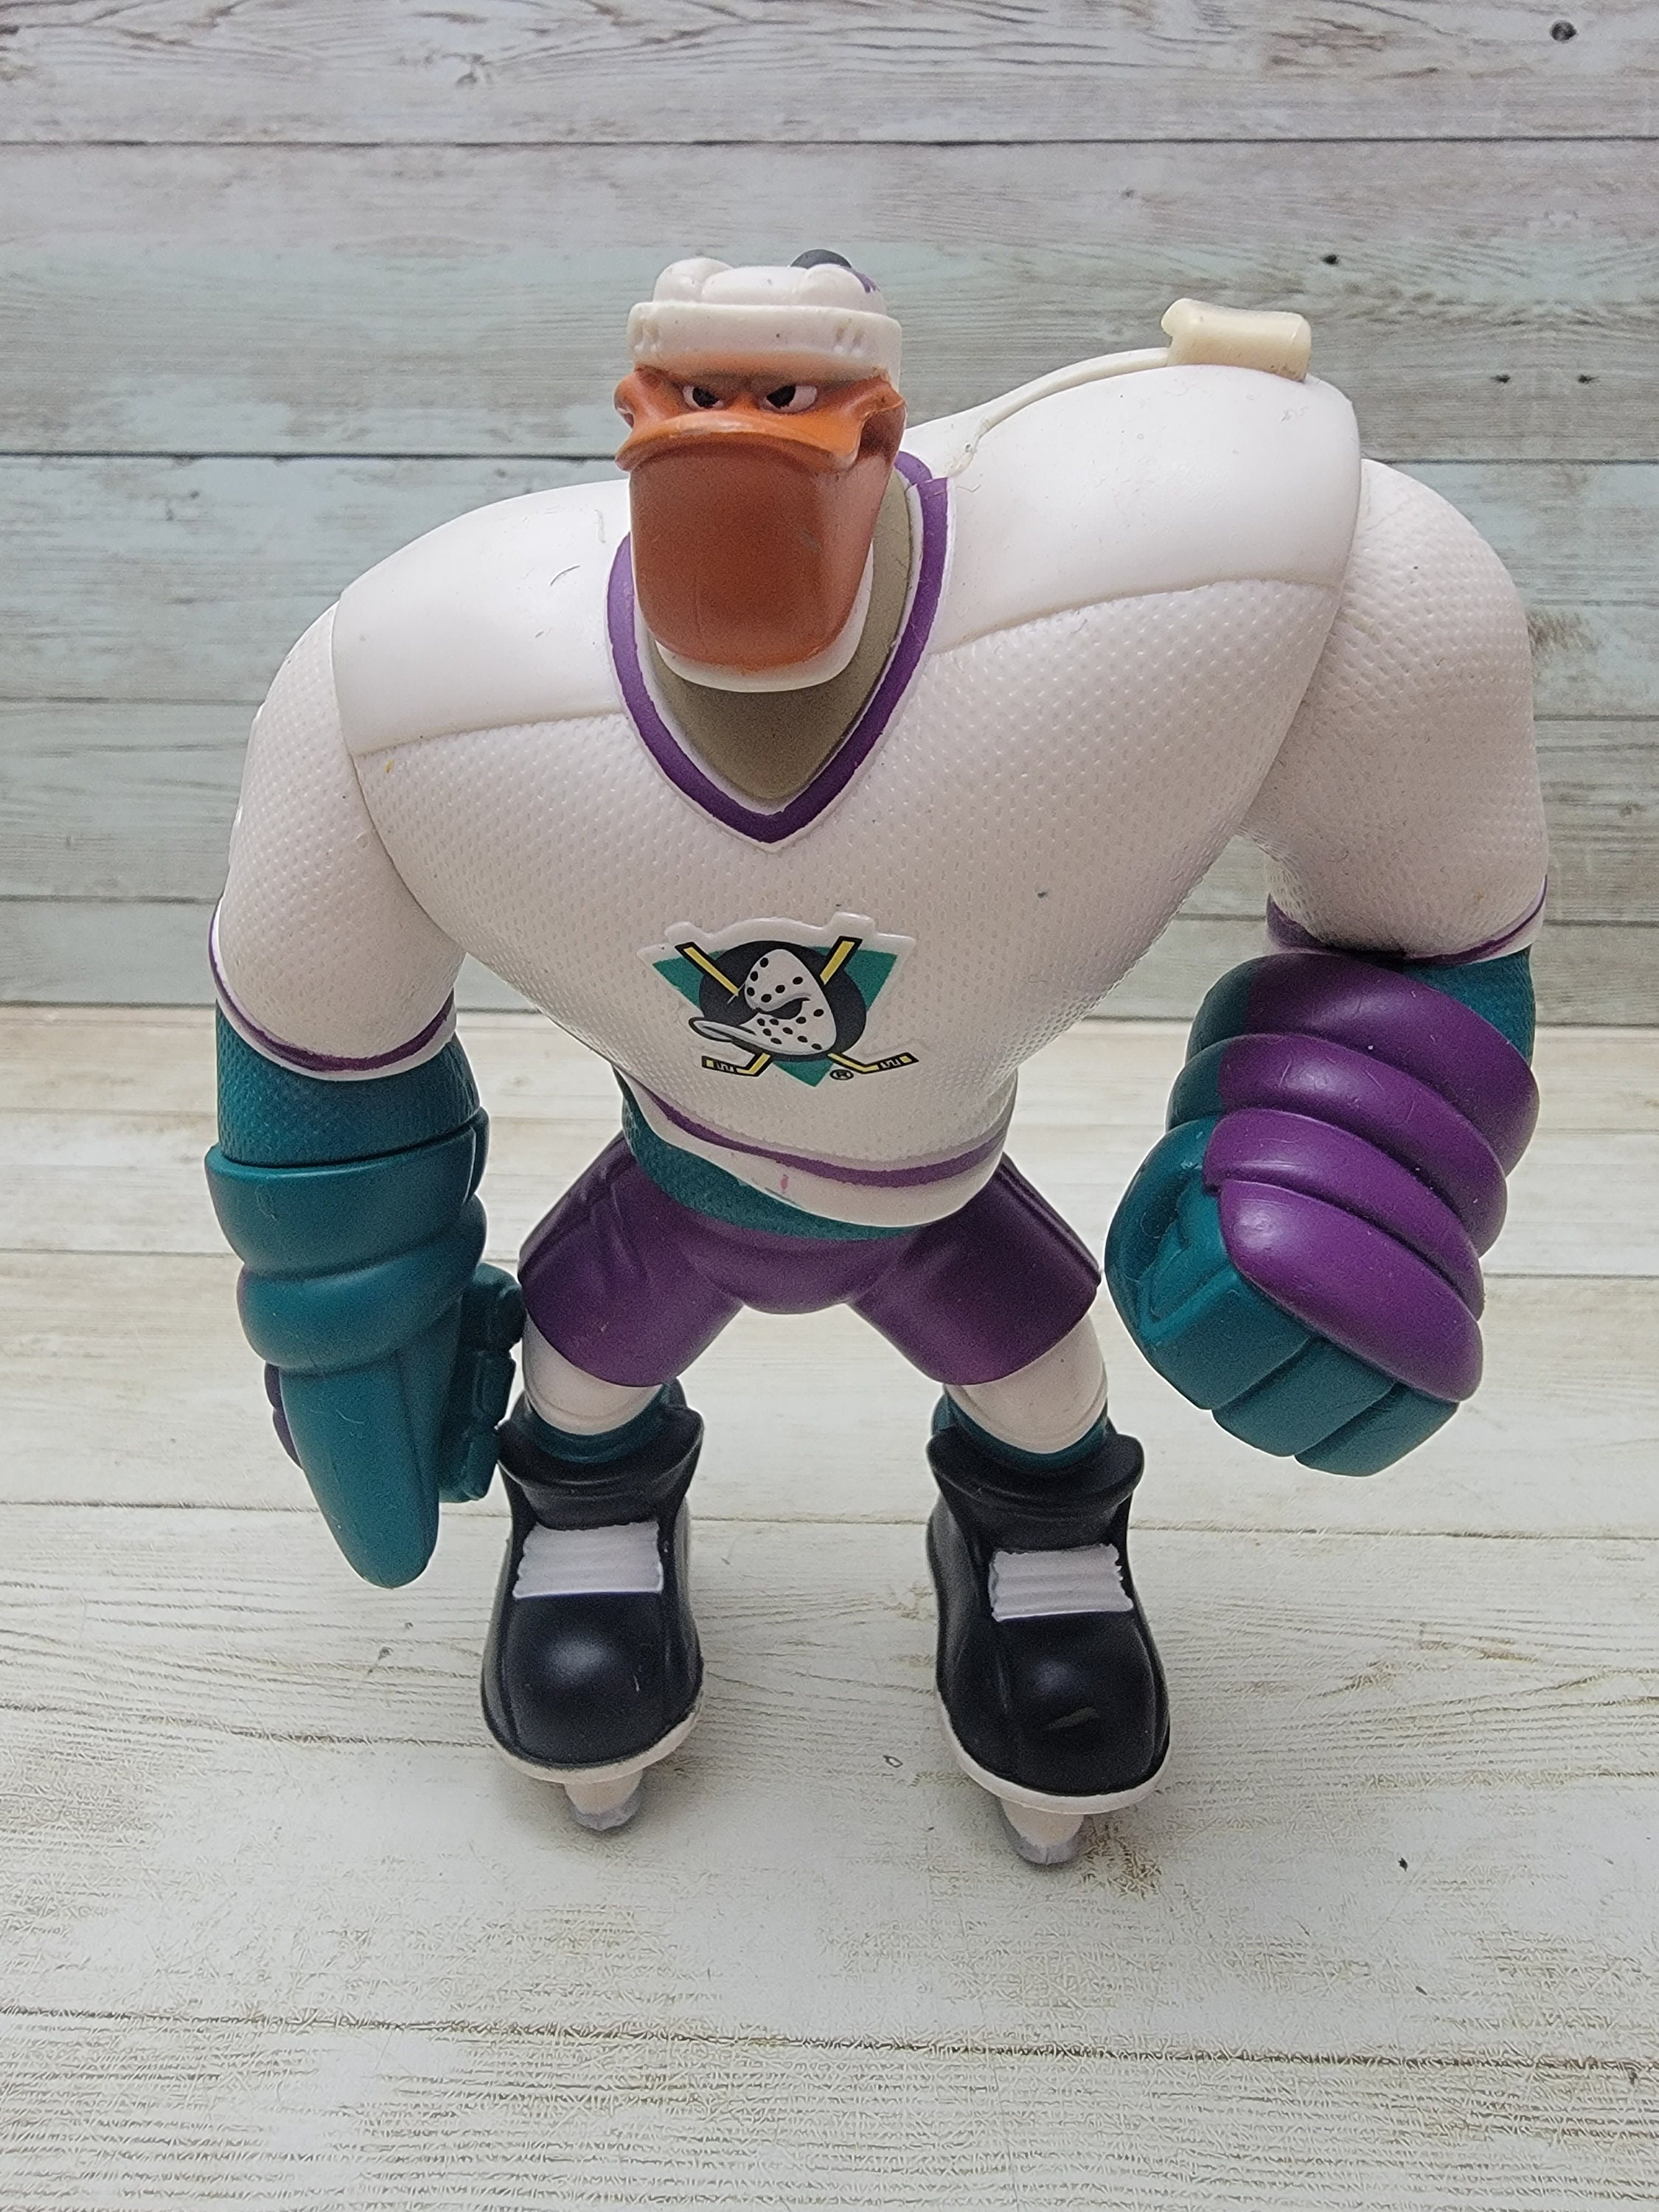 Nosedive (Puck Bomber) - Mighty Ducks - Extreme Battle Ducks - Mattel  Action Figure